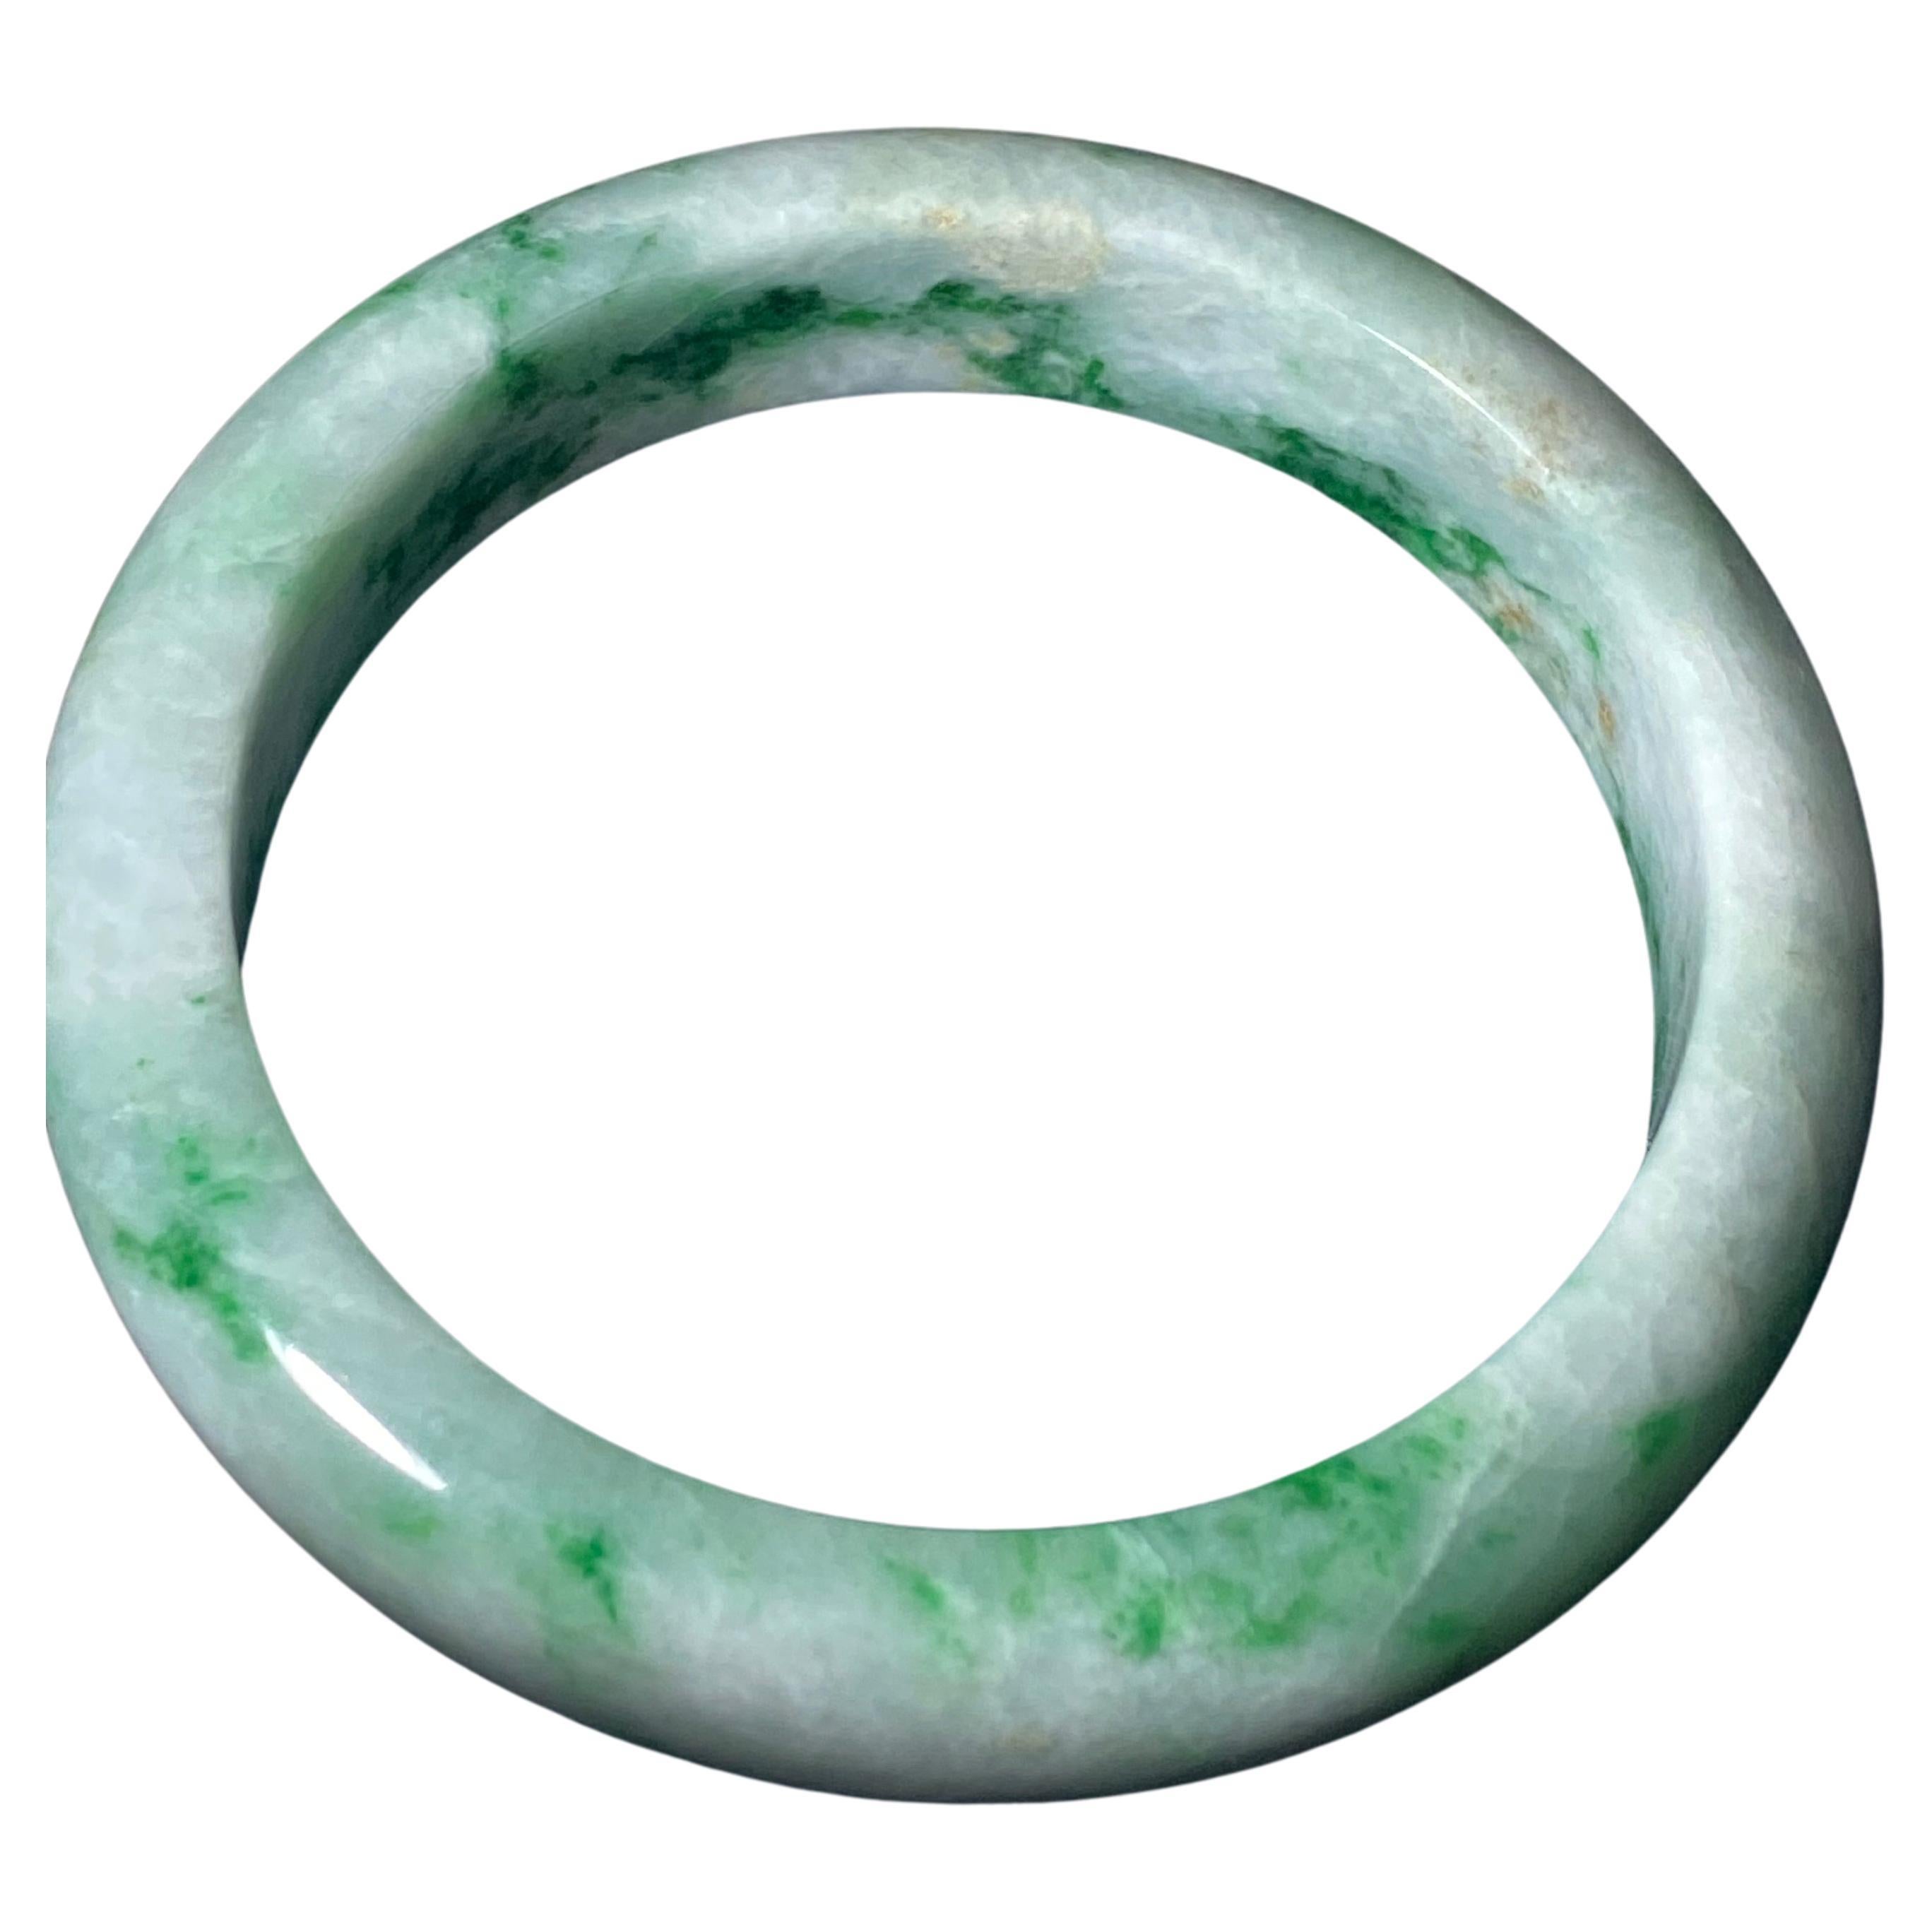 Bracelet jonc arrondi en jade vert et blanc, 65,3 g, 15 mm de large, 21 cm de circonférence.